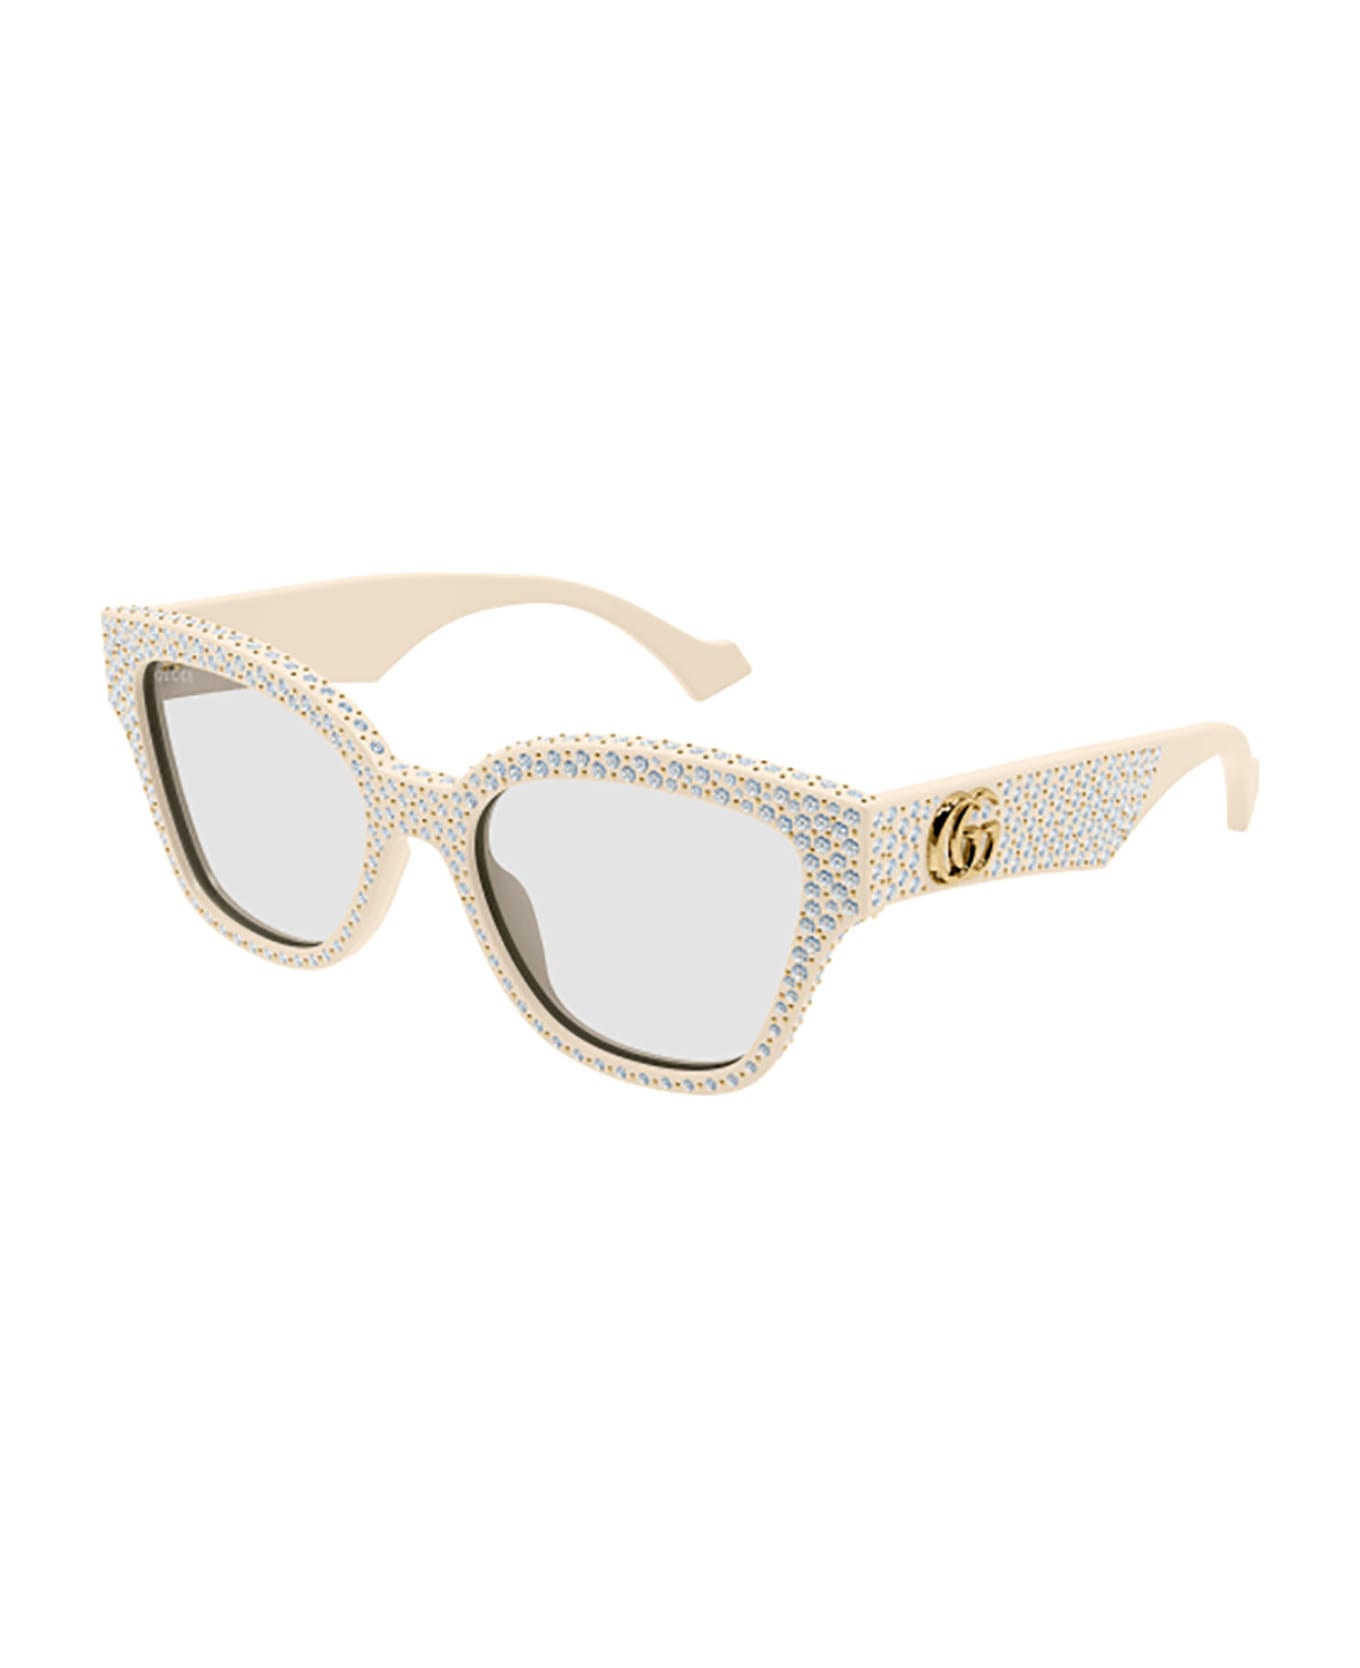 Gucci Eyewear Gg1424s Sunglasses - 001 ivory ivory transpare